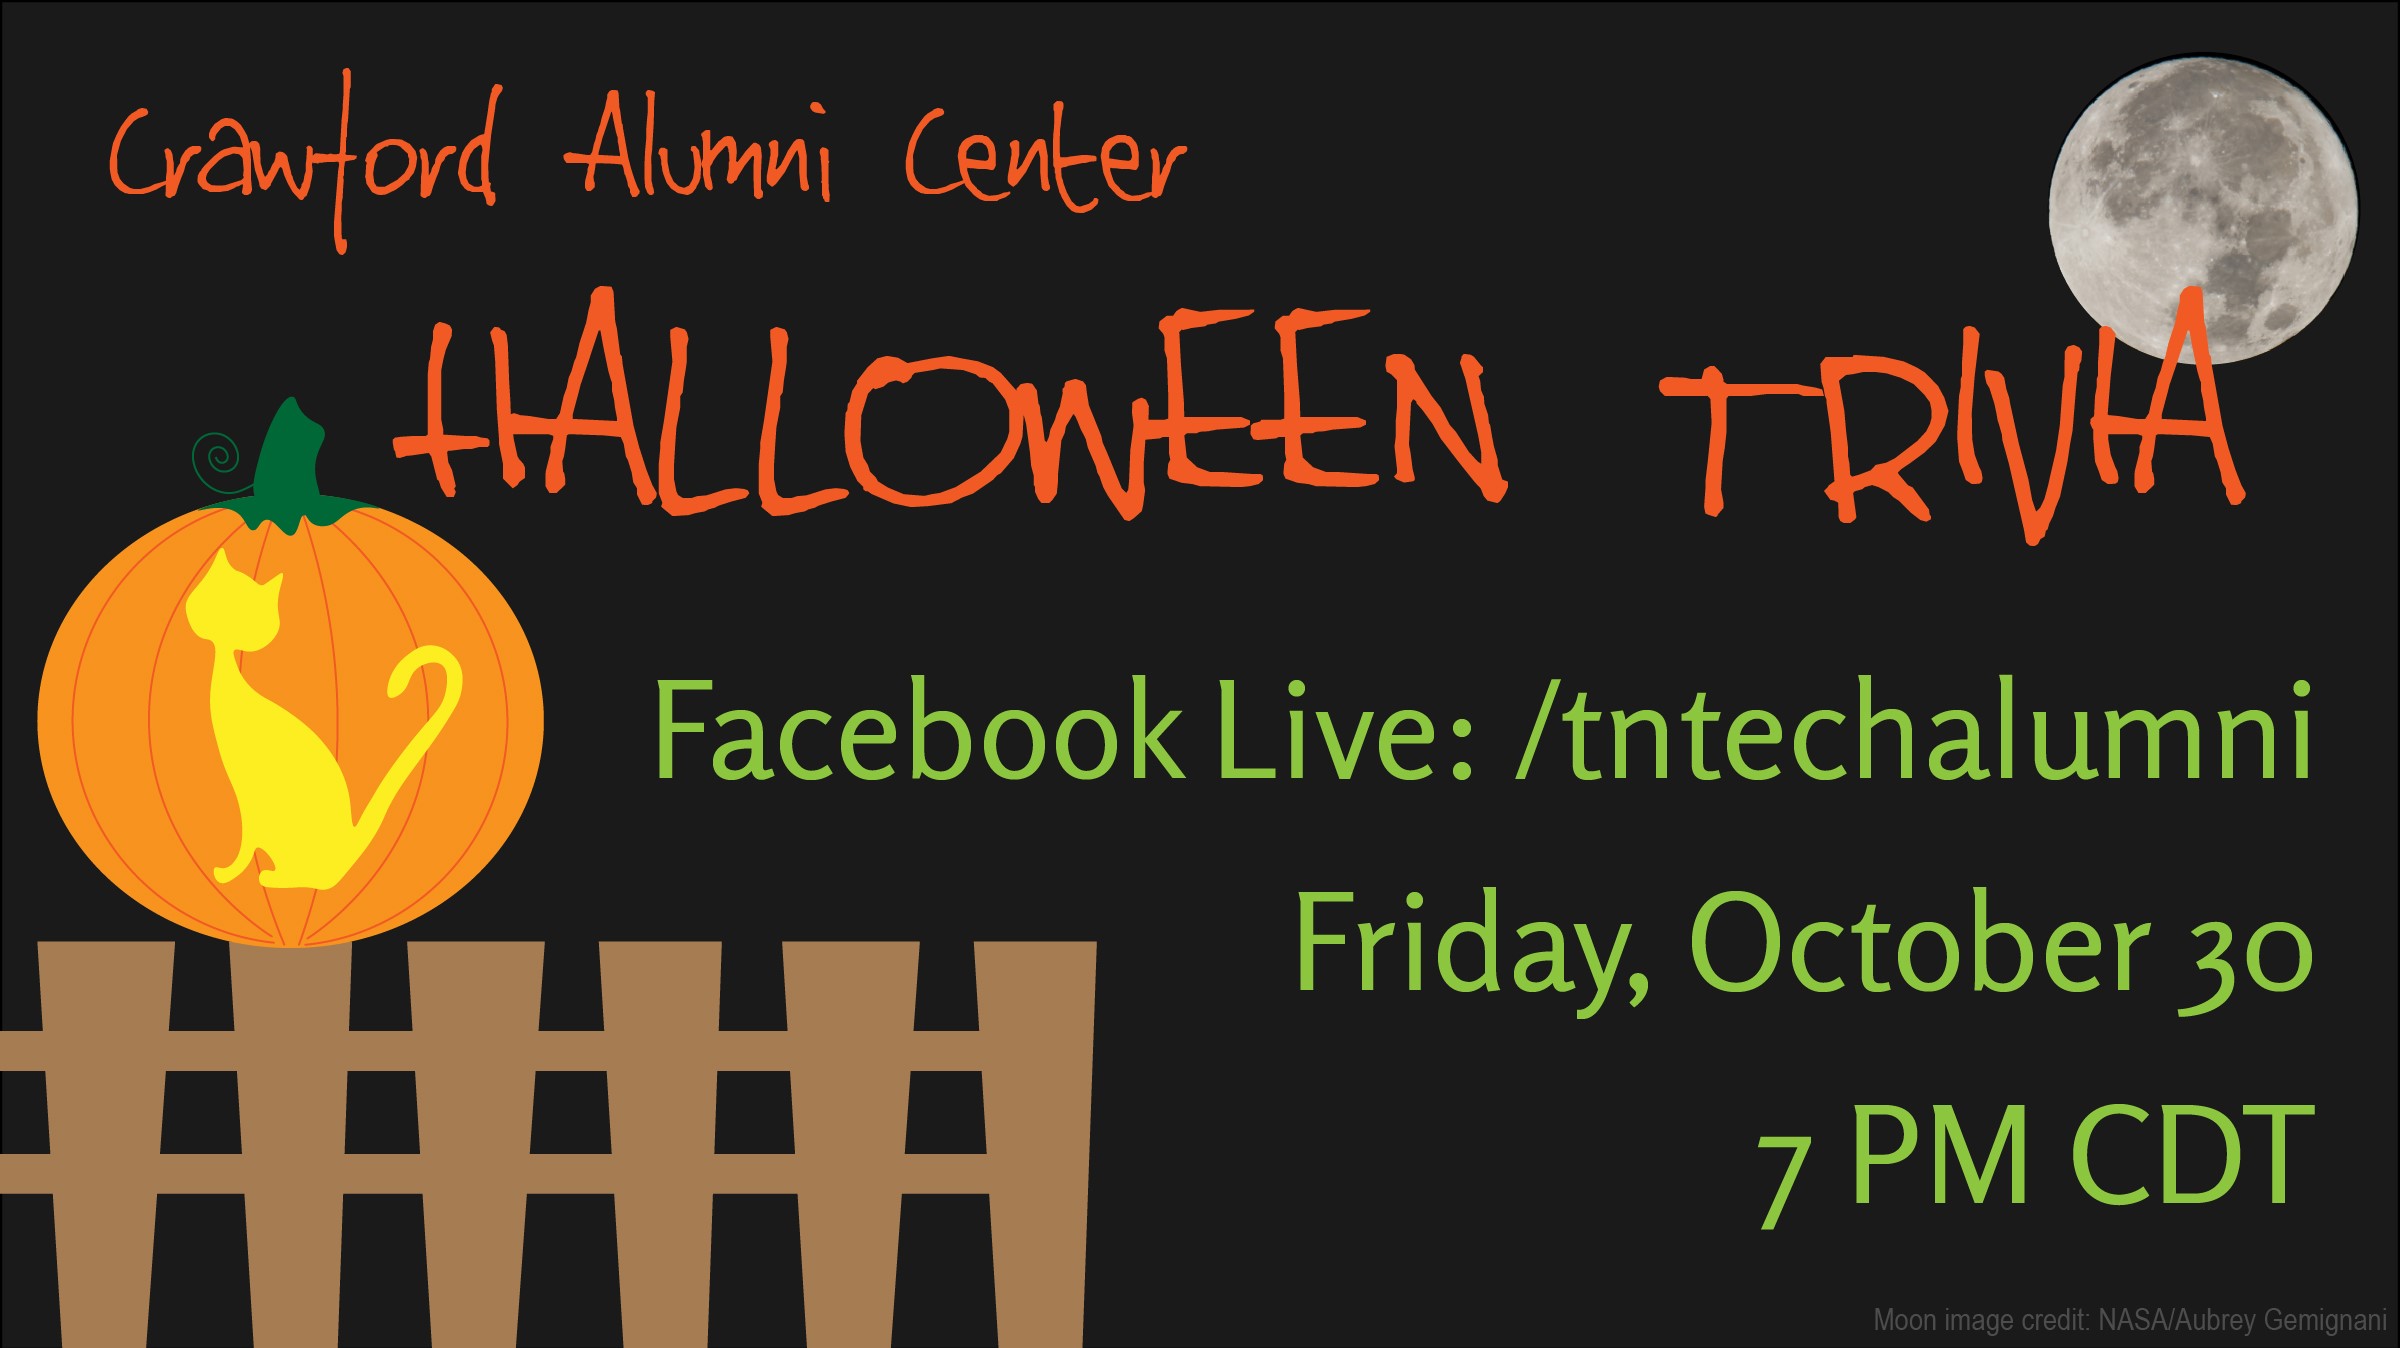 Crawford Alumni Center Halloween Trivia; Facebooke Live /tntechalumni; Friday, October 30; 7 PM CDT